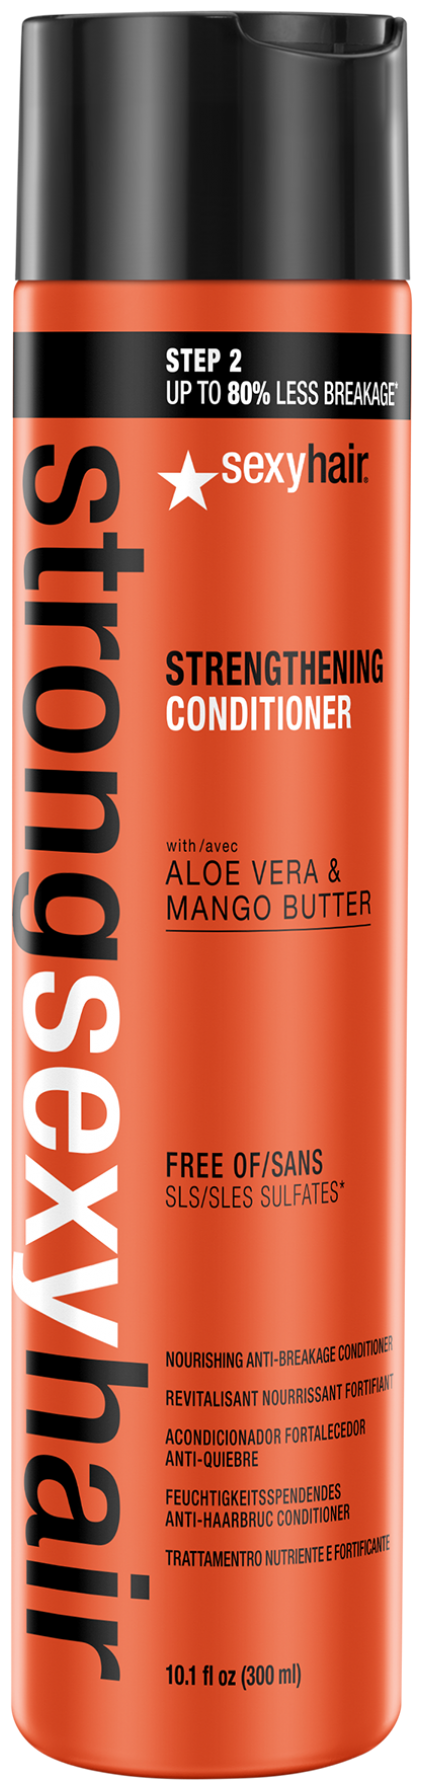 Sexy Hair кондиционер Strong Strengthening для прочности волос, 300 мл